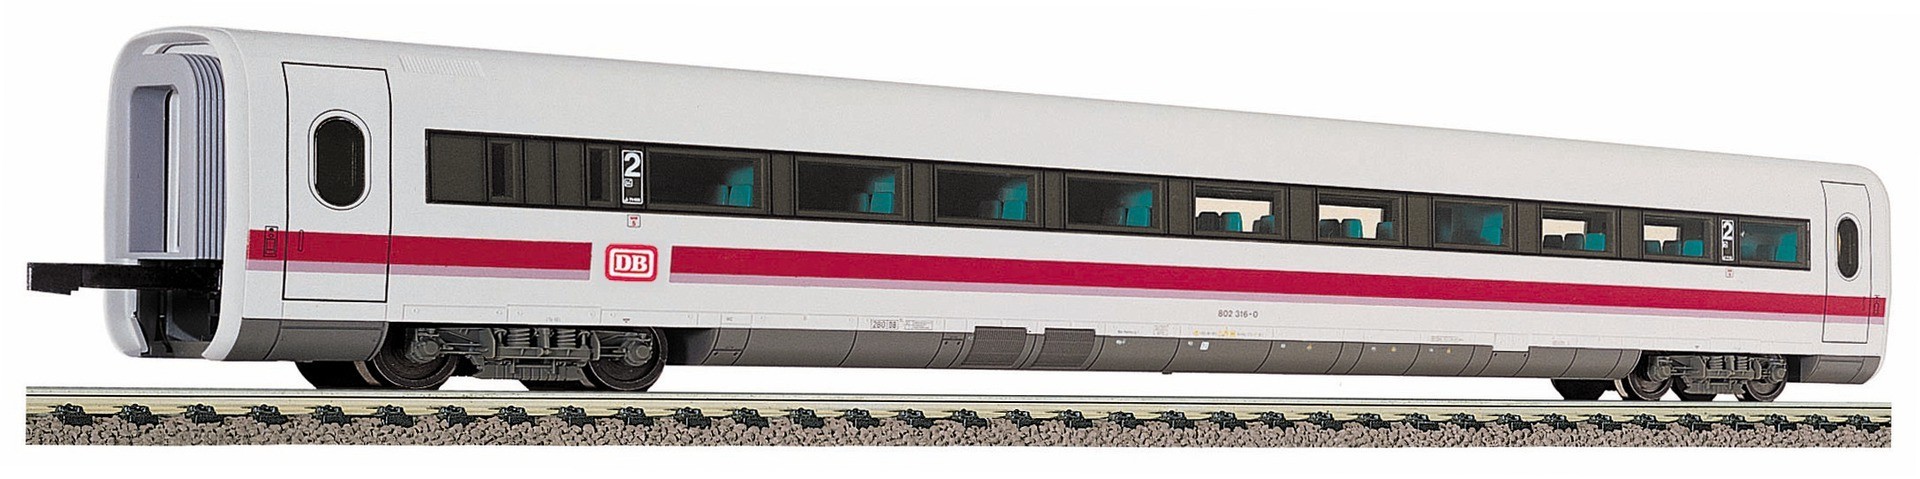 Trains miniatures : locomotives et autorail - 2nd class ICE 1 coach ty